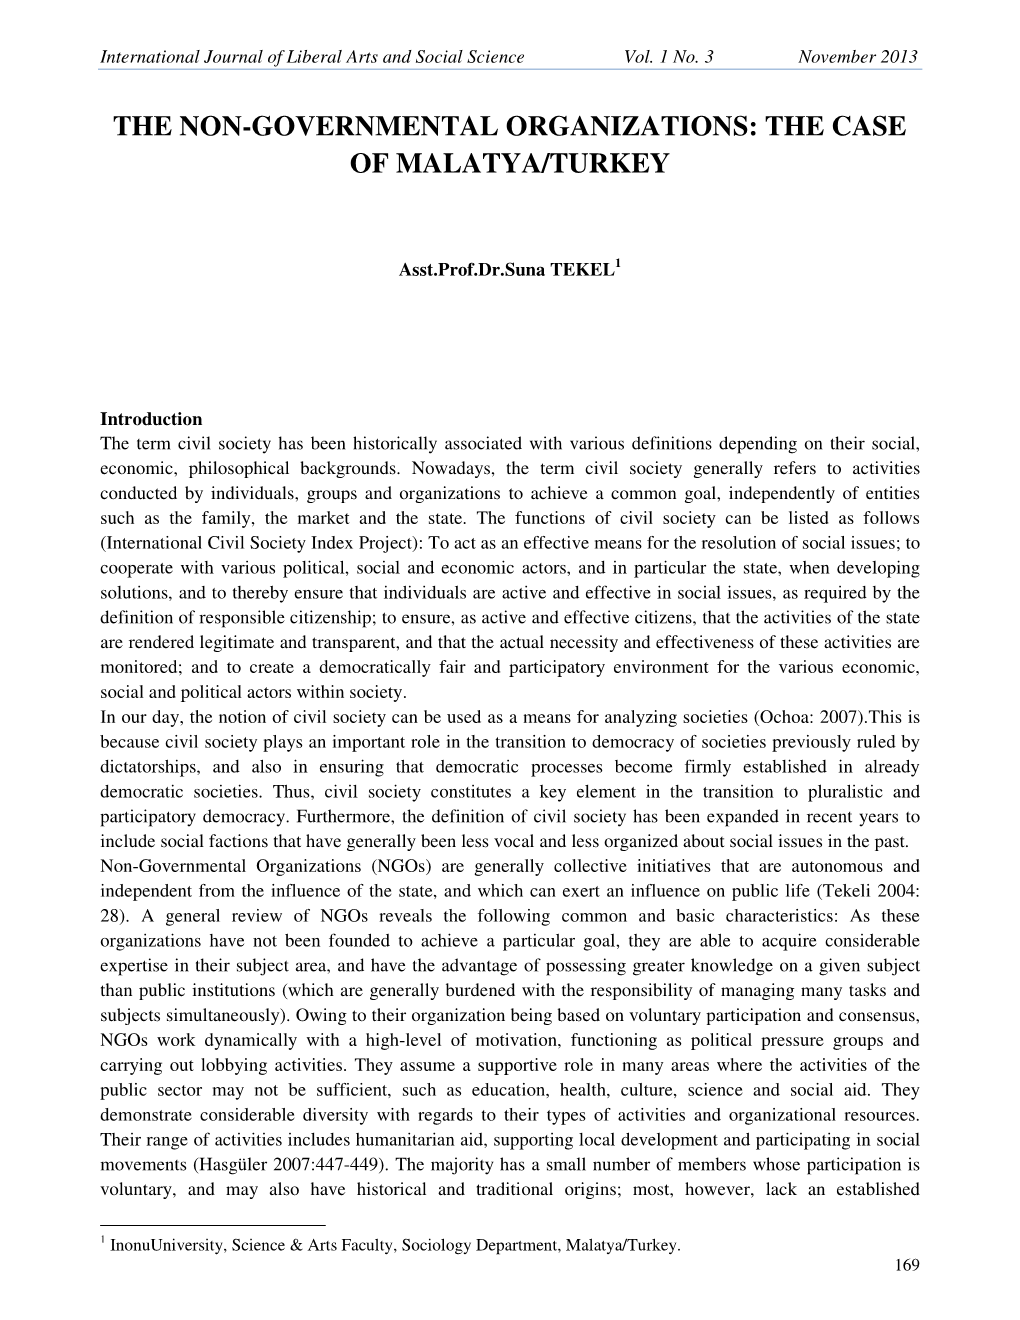 The Non-Governmental Organizations: the Case of Malatya/Turkey